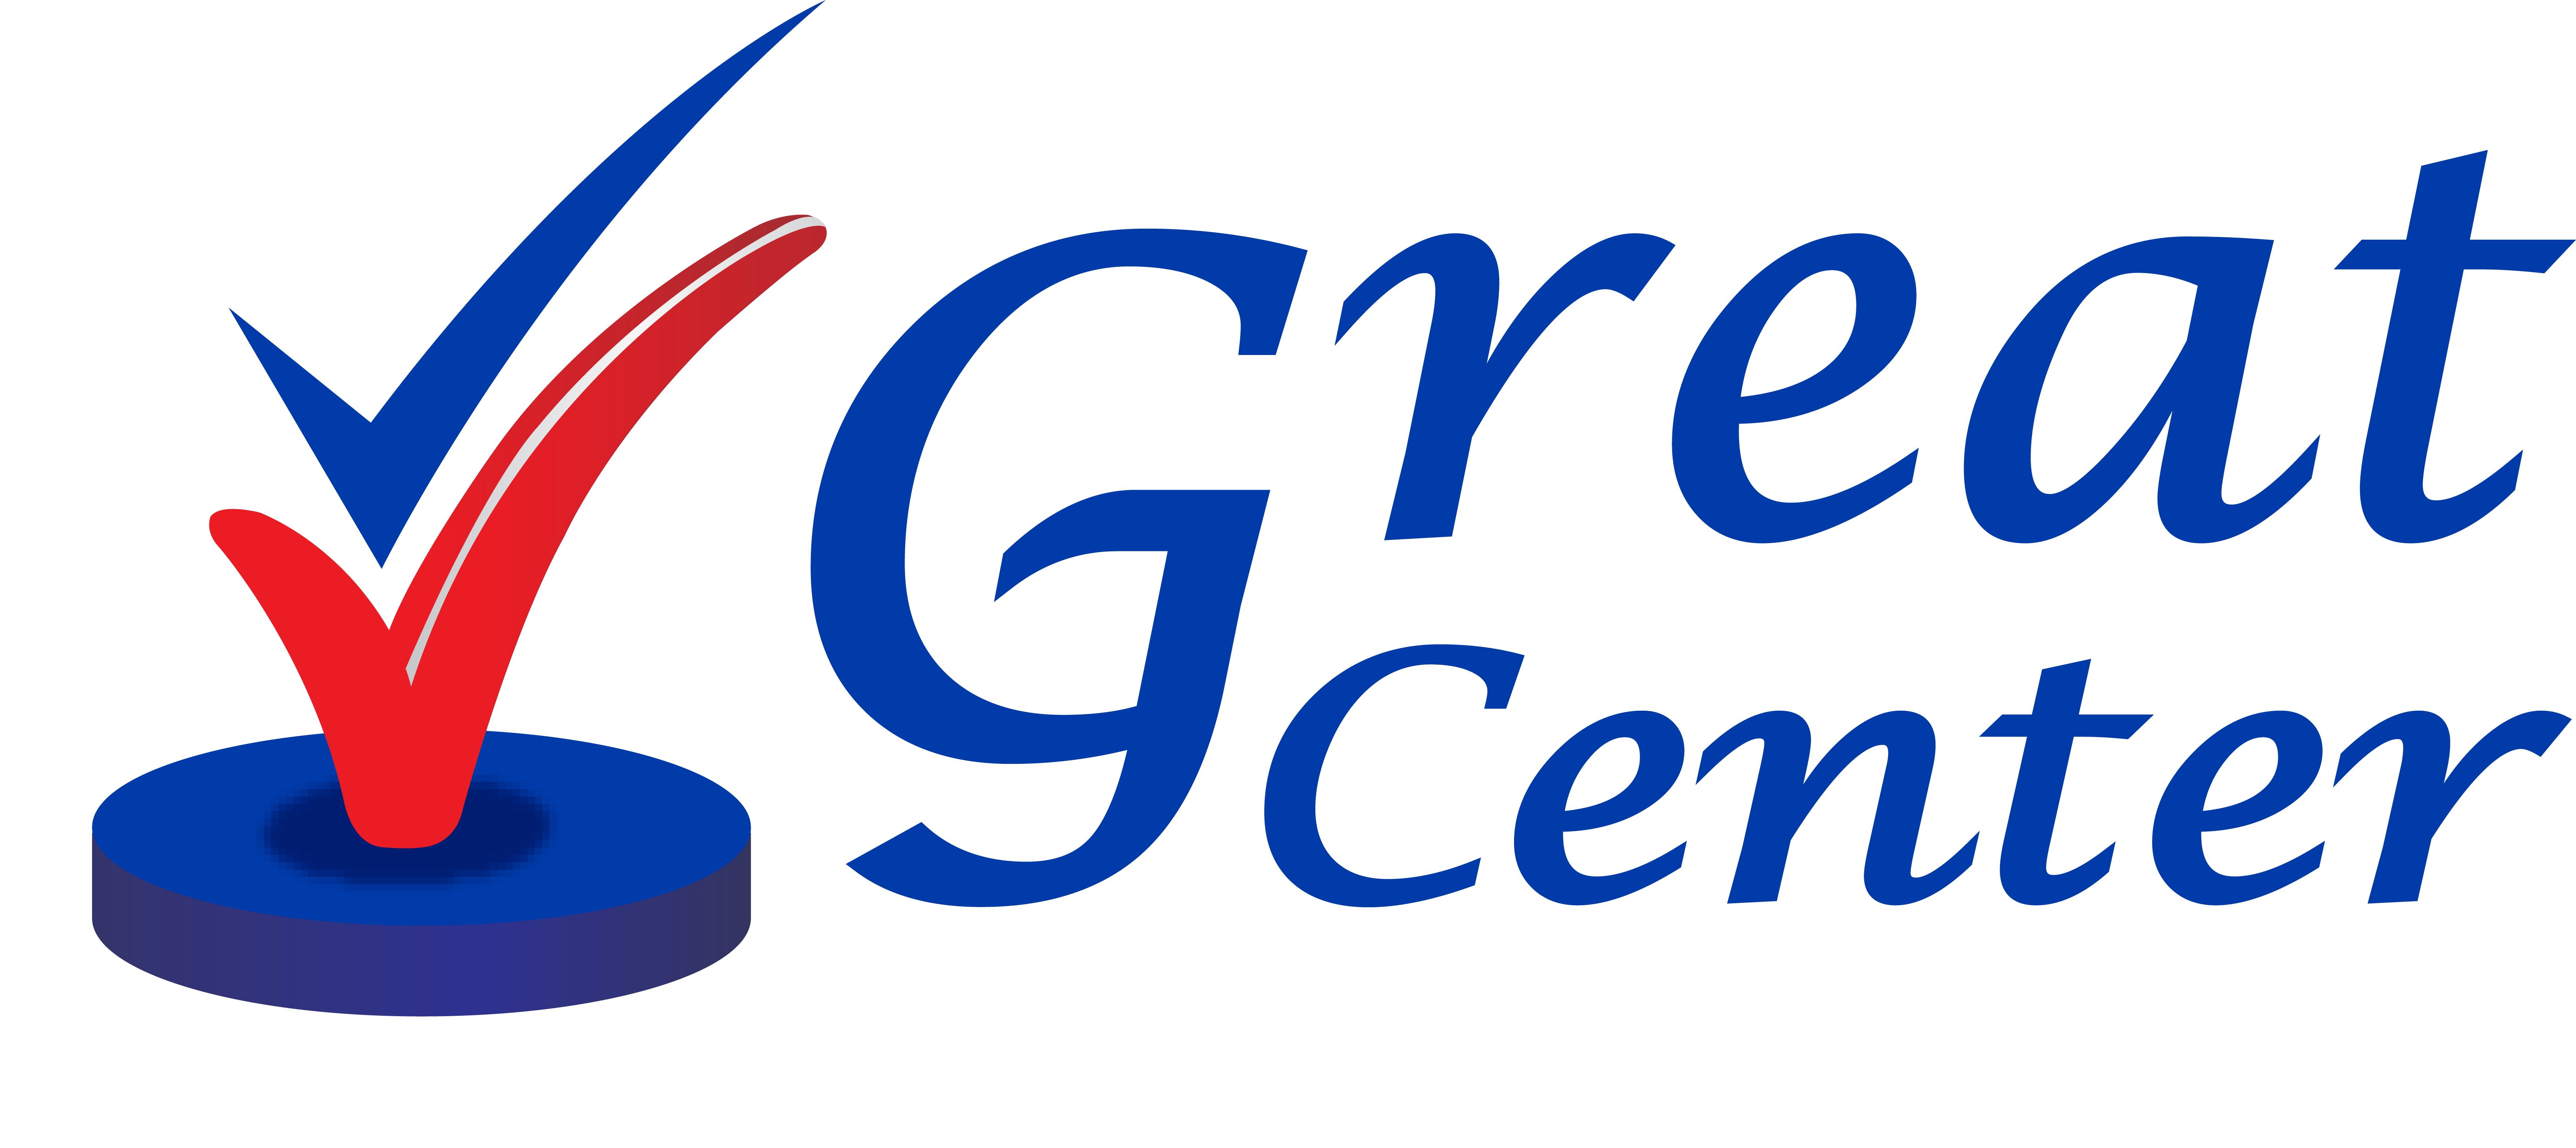 The Great Center – ฝึกอบรม Training